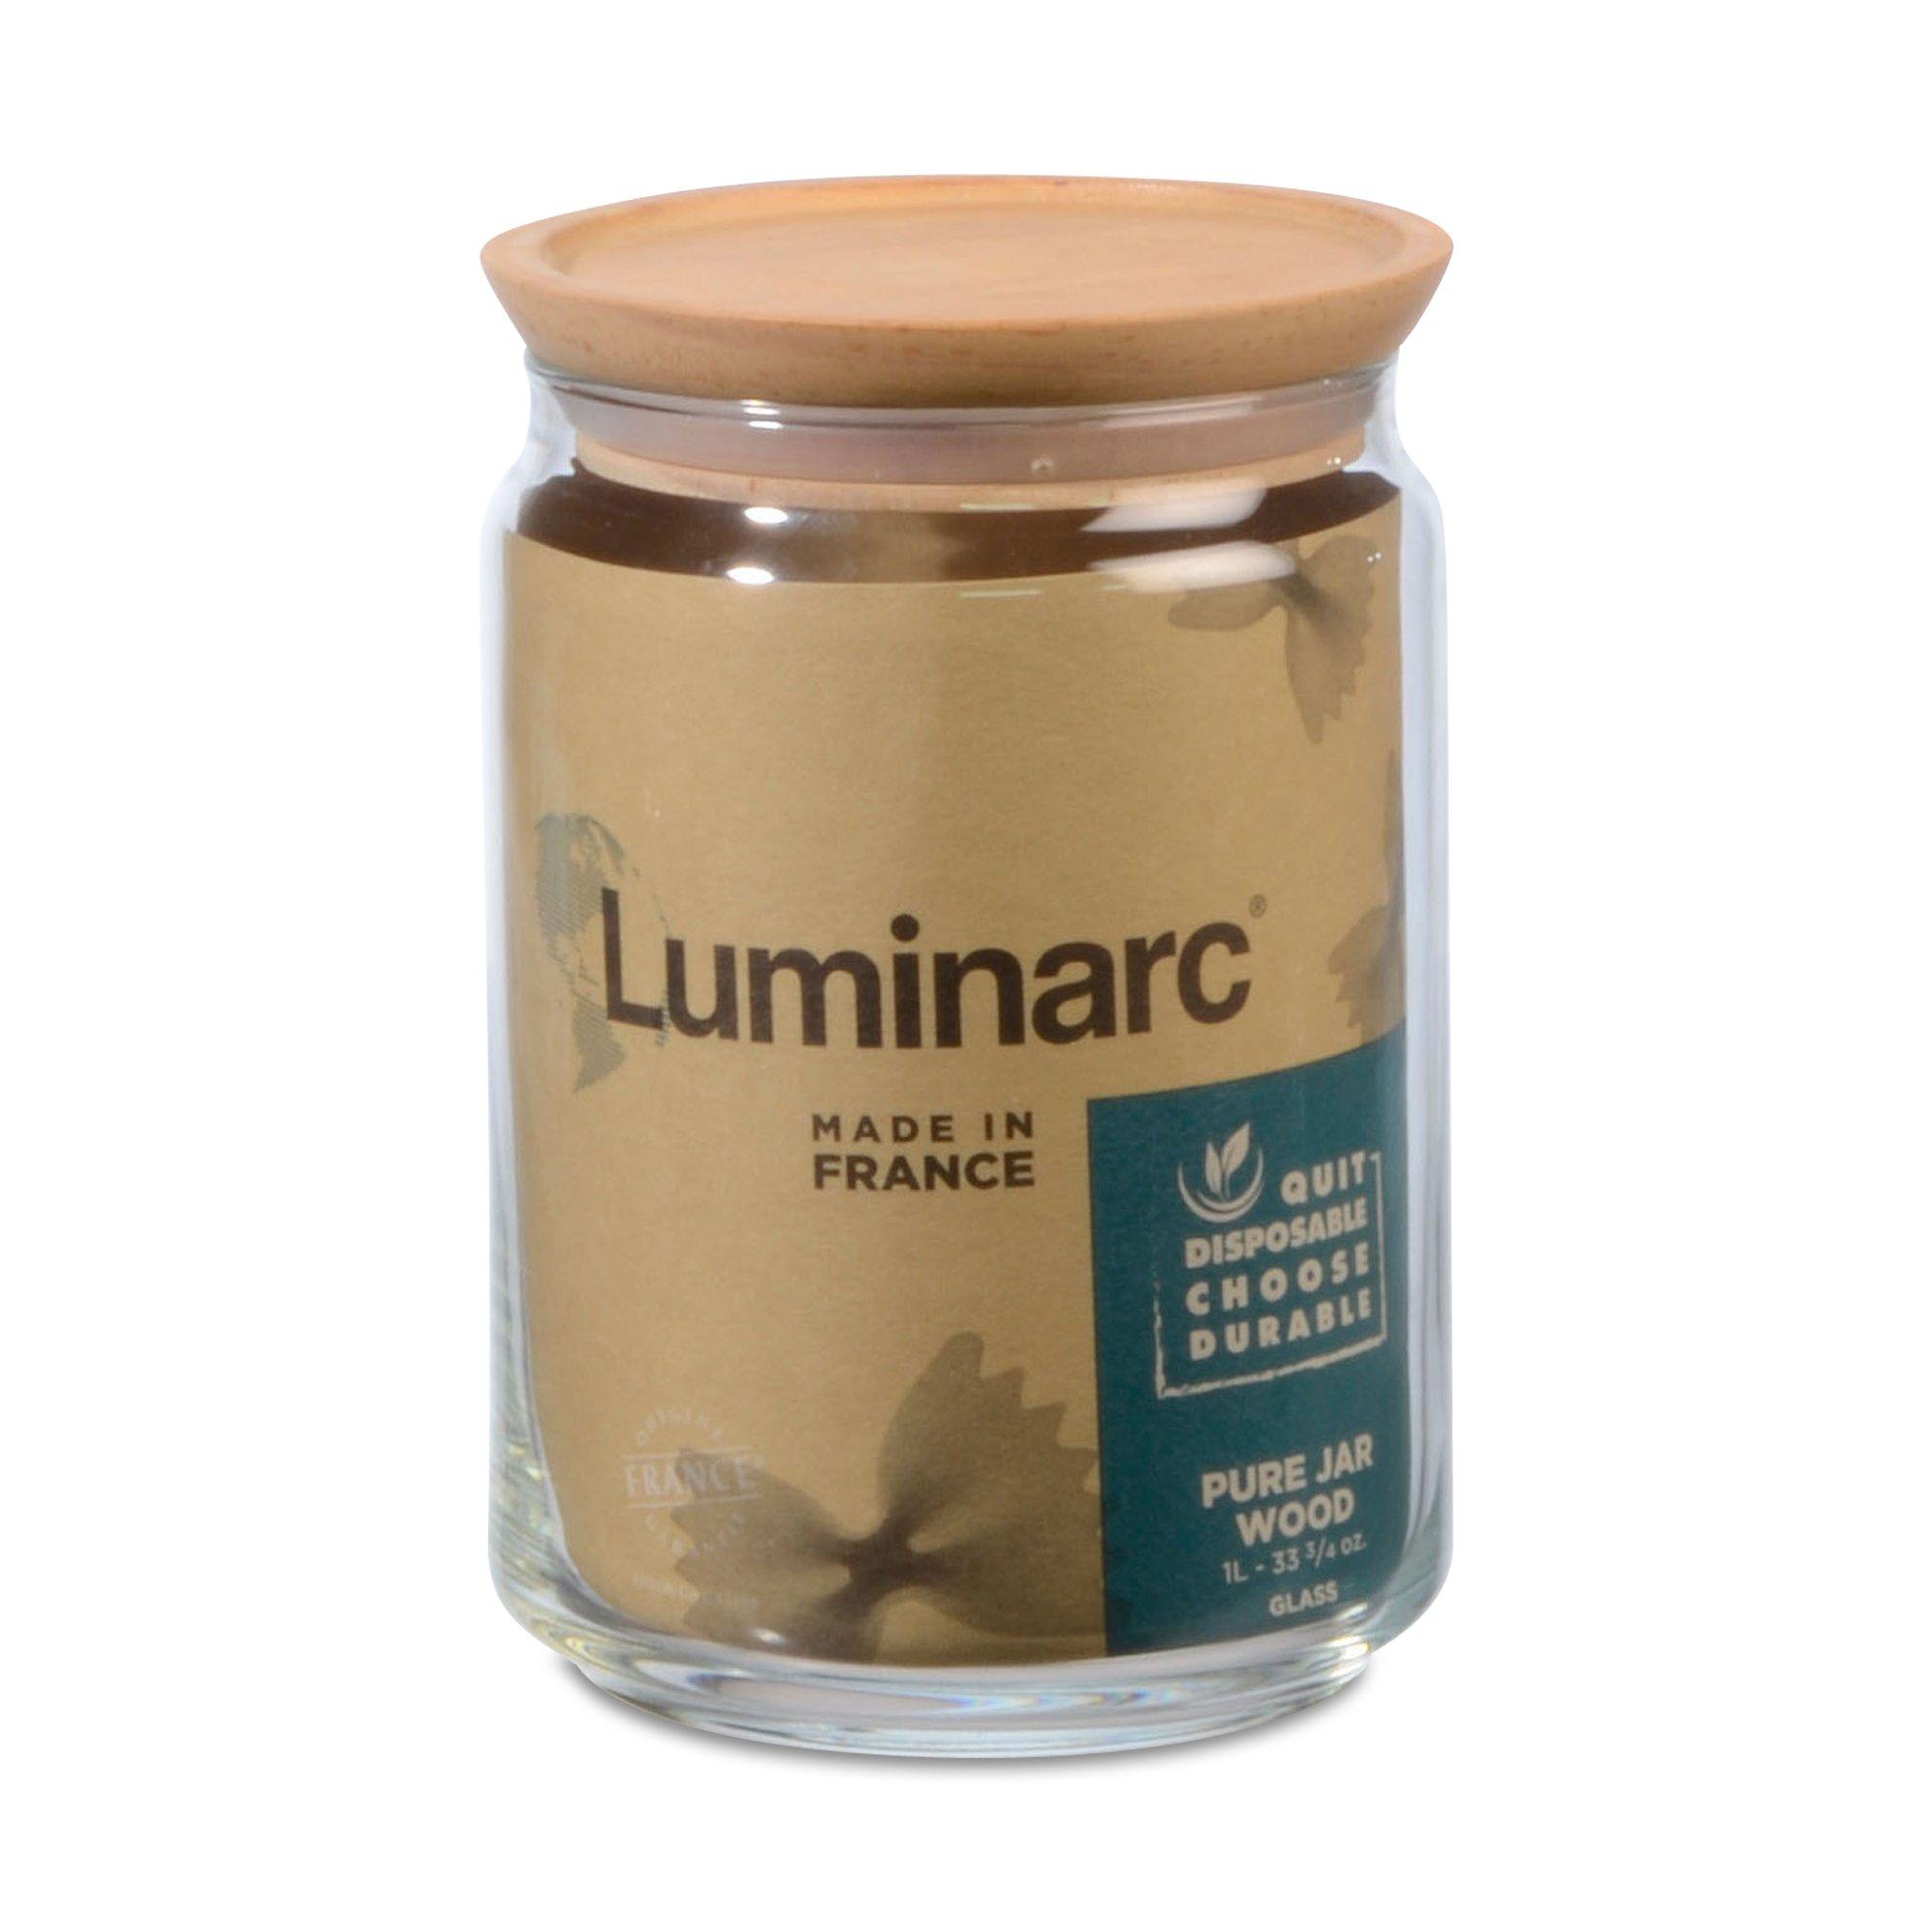 Luminarc Dose Pure Jar Wood 